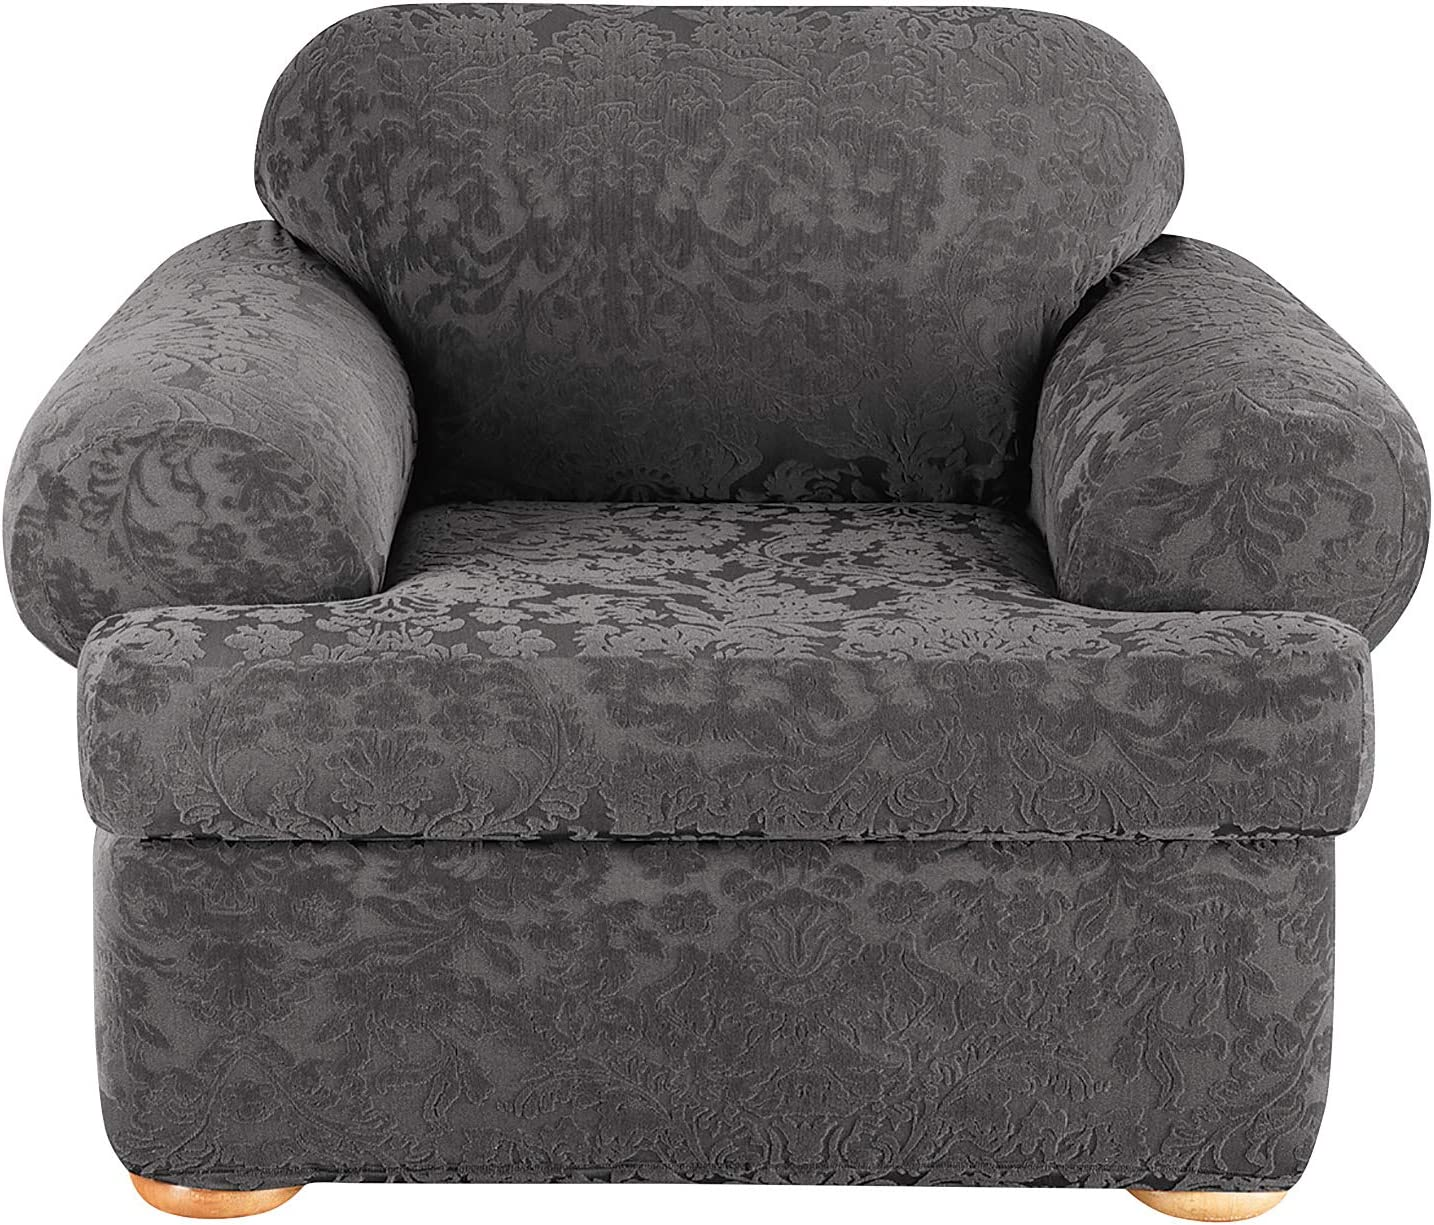 SureFit Home Décor Stretch Jacquard Damask T-Cushion Chair Two Piece Slipcover (Gray) $42.49